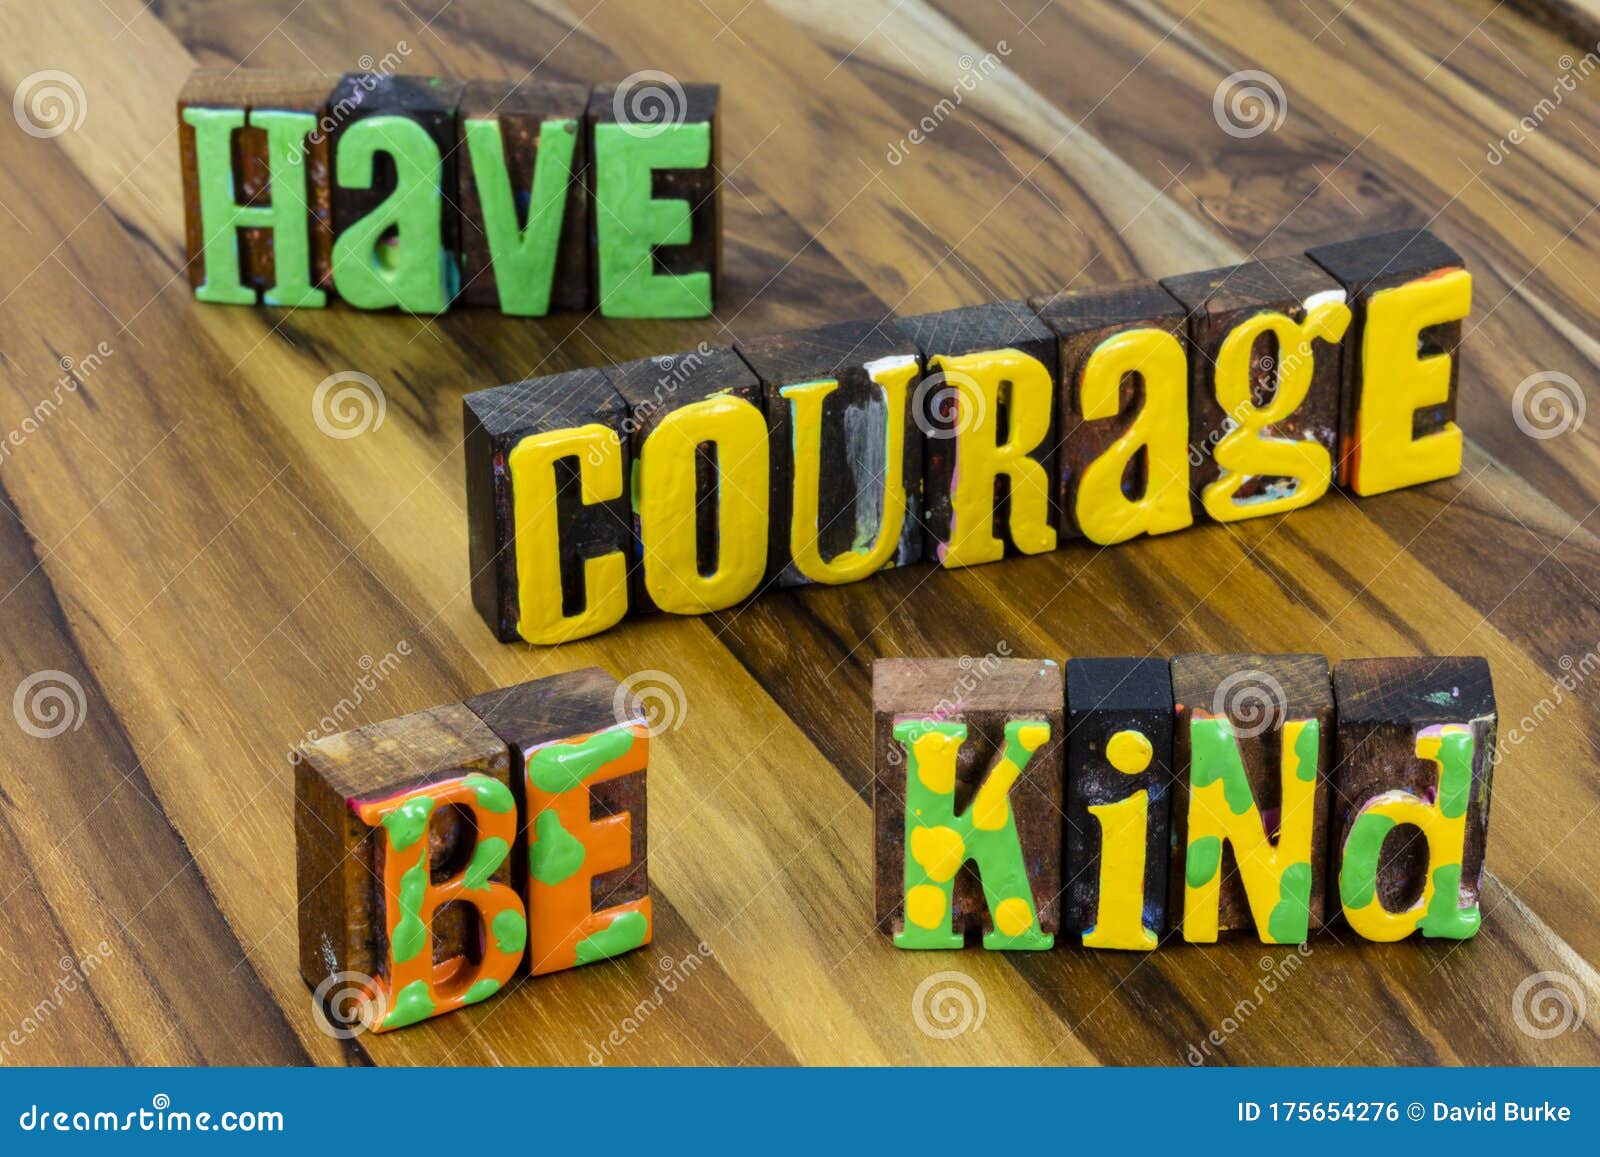 have courage kind brave gentle soul help people kindness